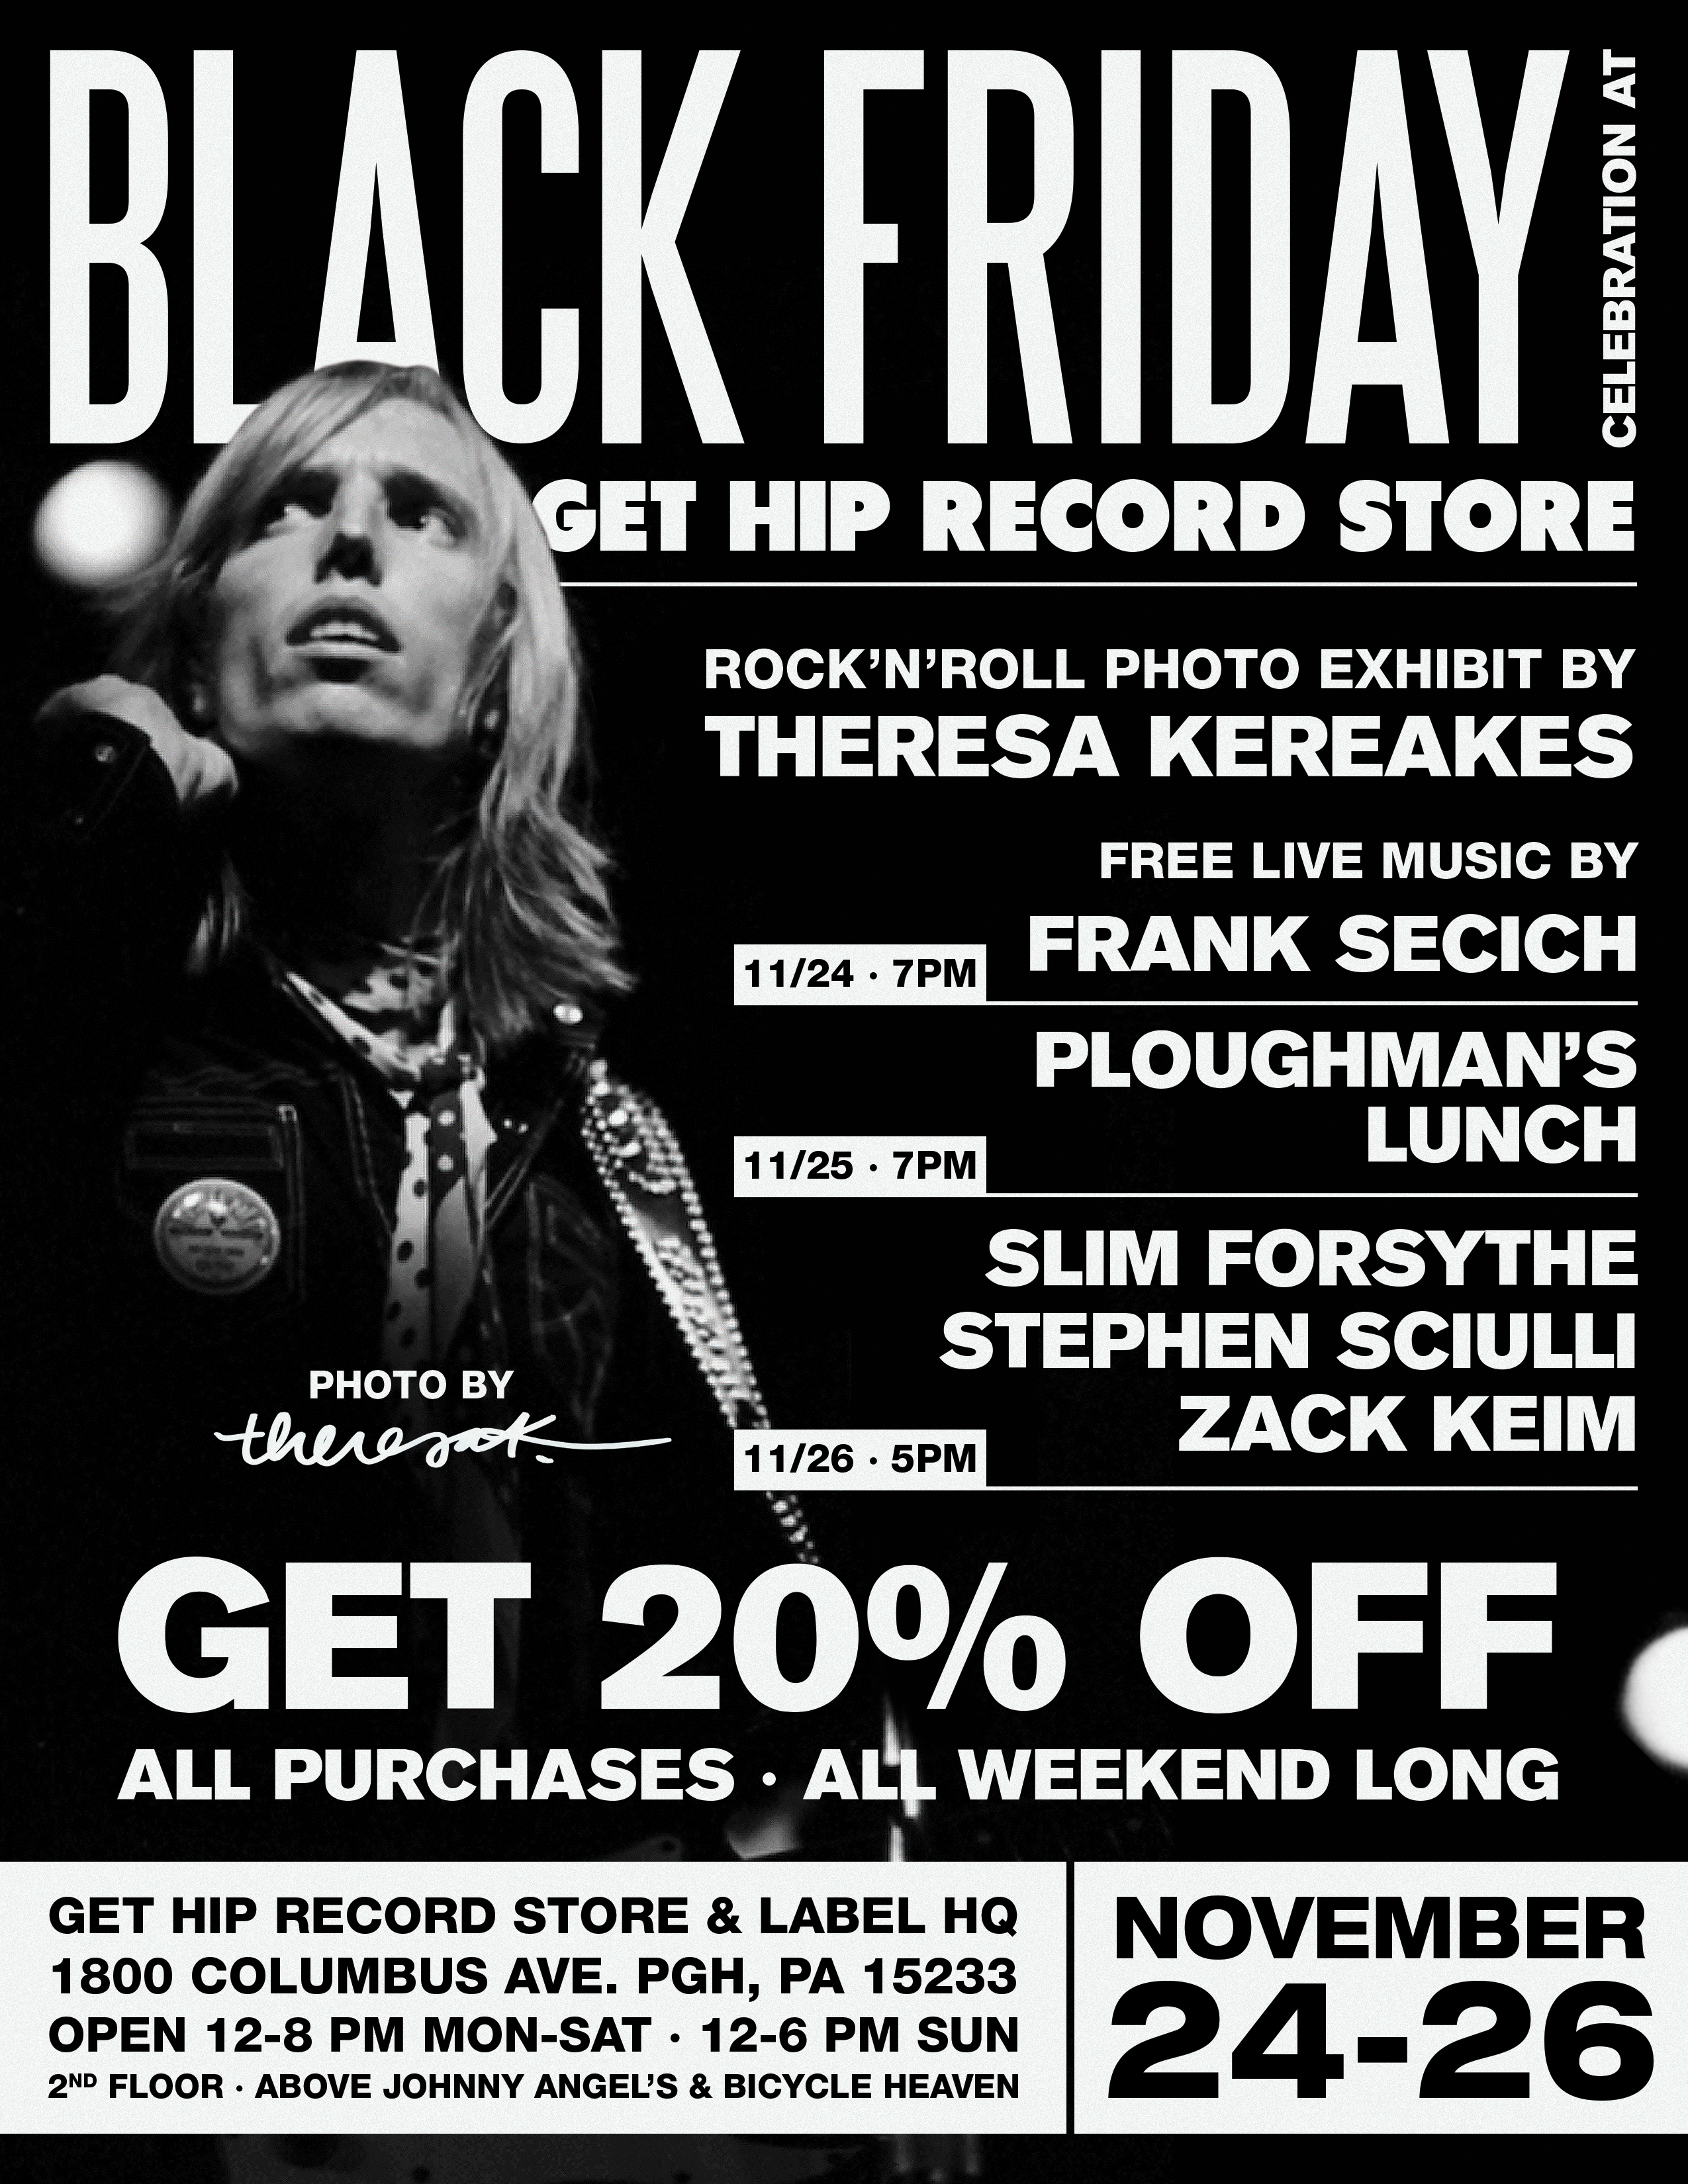 Celebrate Black Friday At Get Hip Record Store Nov 24 26 Get Hip Recordings